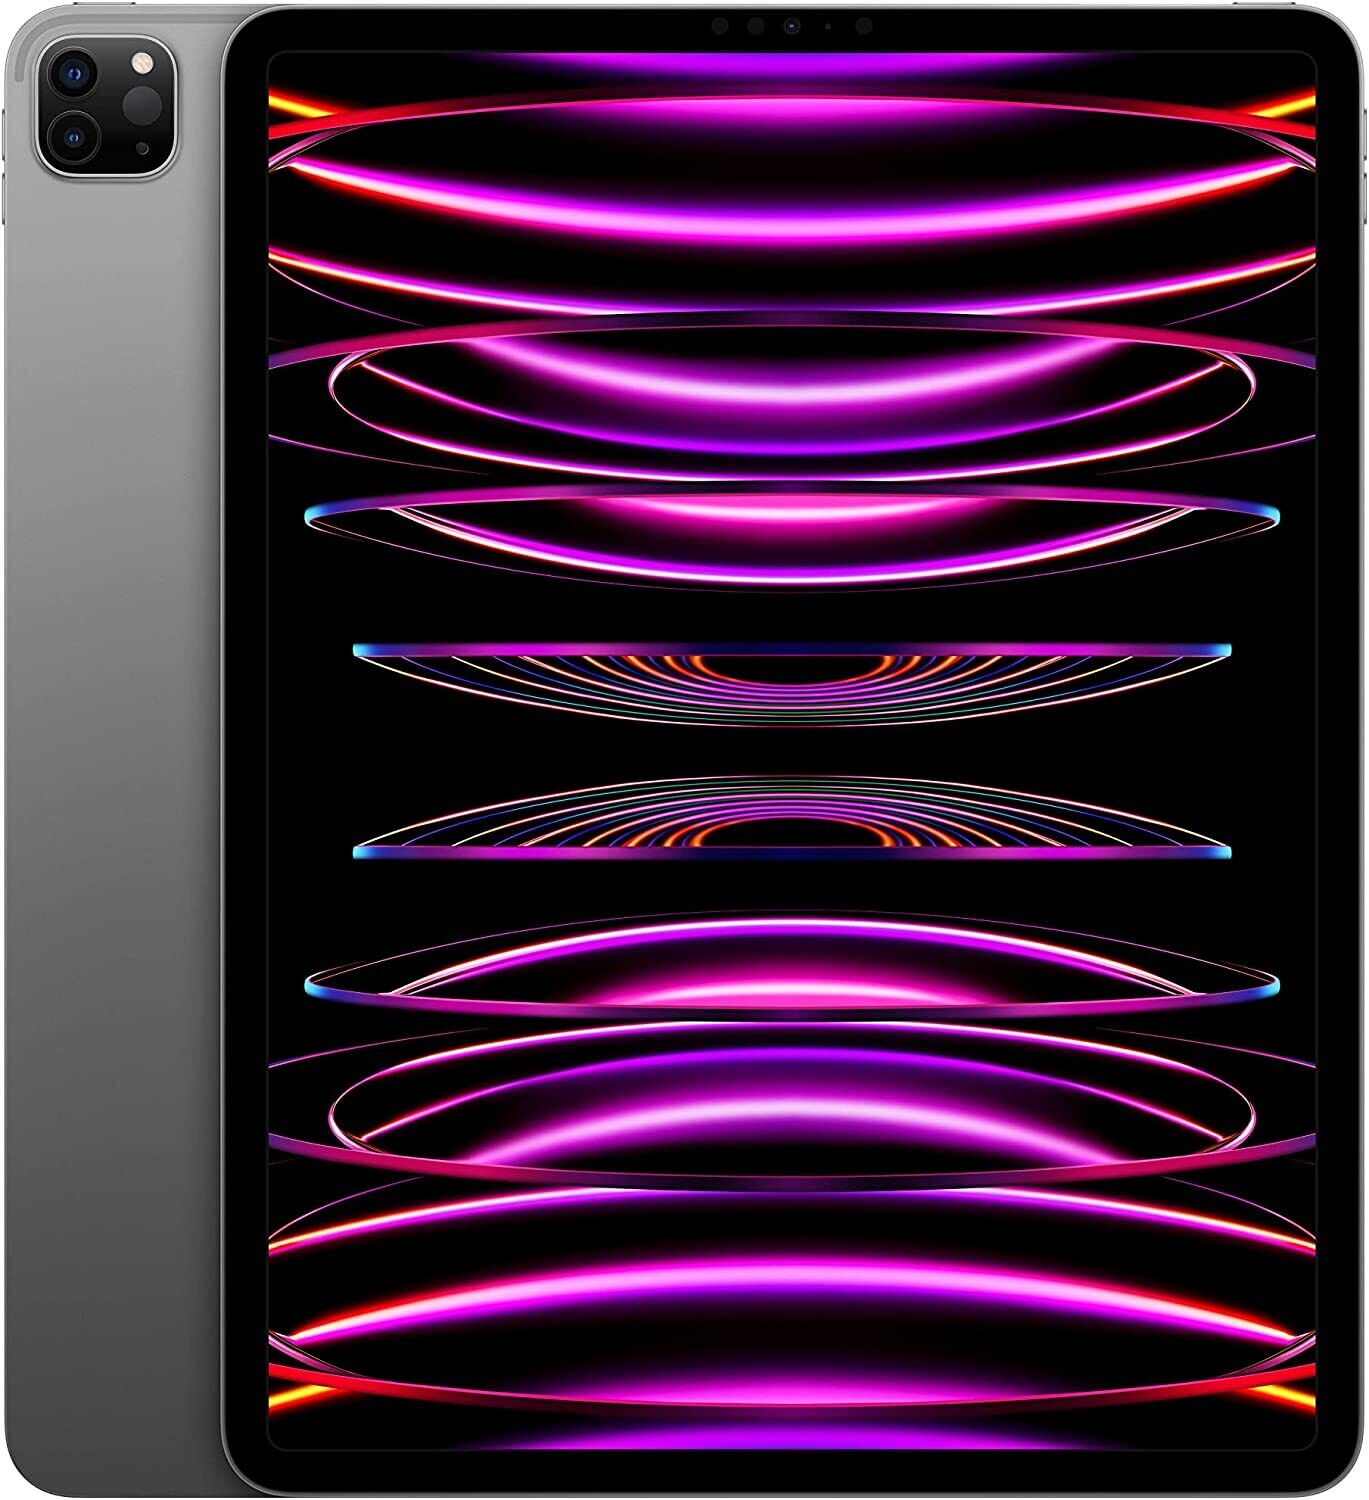 2022 Apple 12.9-inch iPad Pro (Wi-Fi + Cellular, 512GB) - Space Gray (6th Generation)